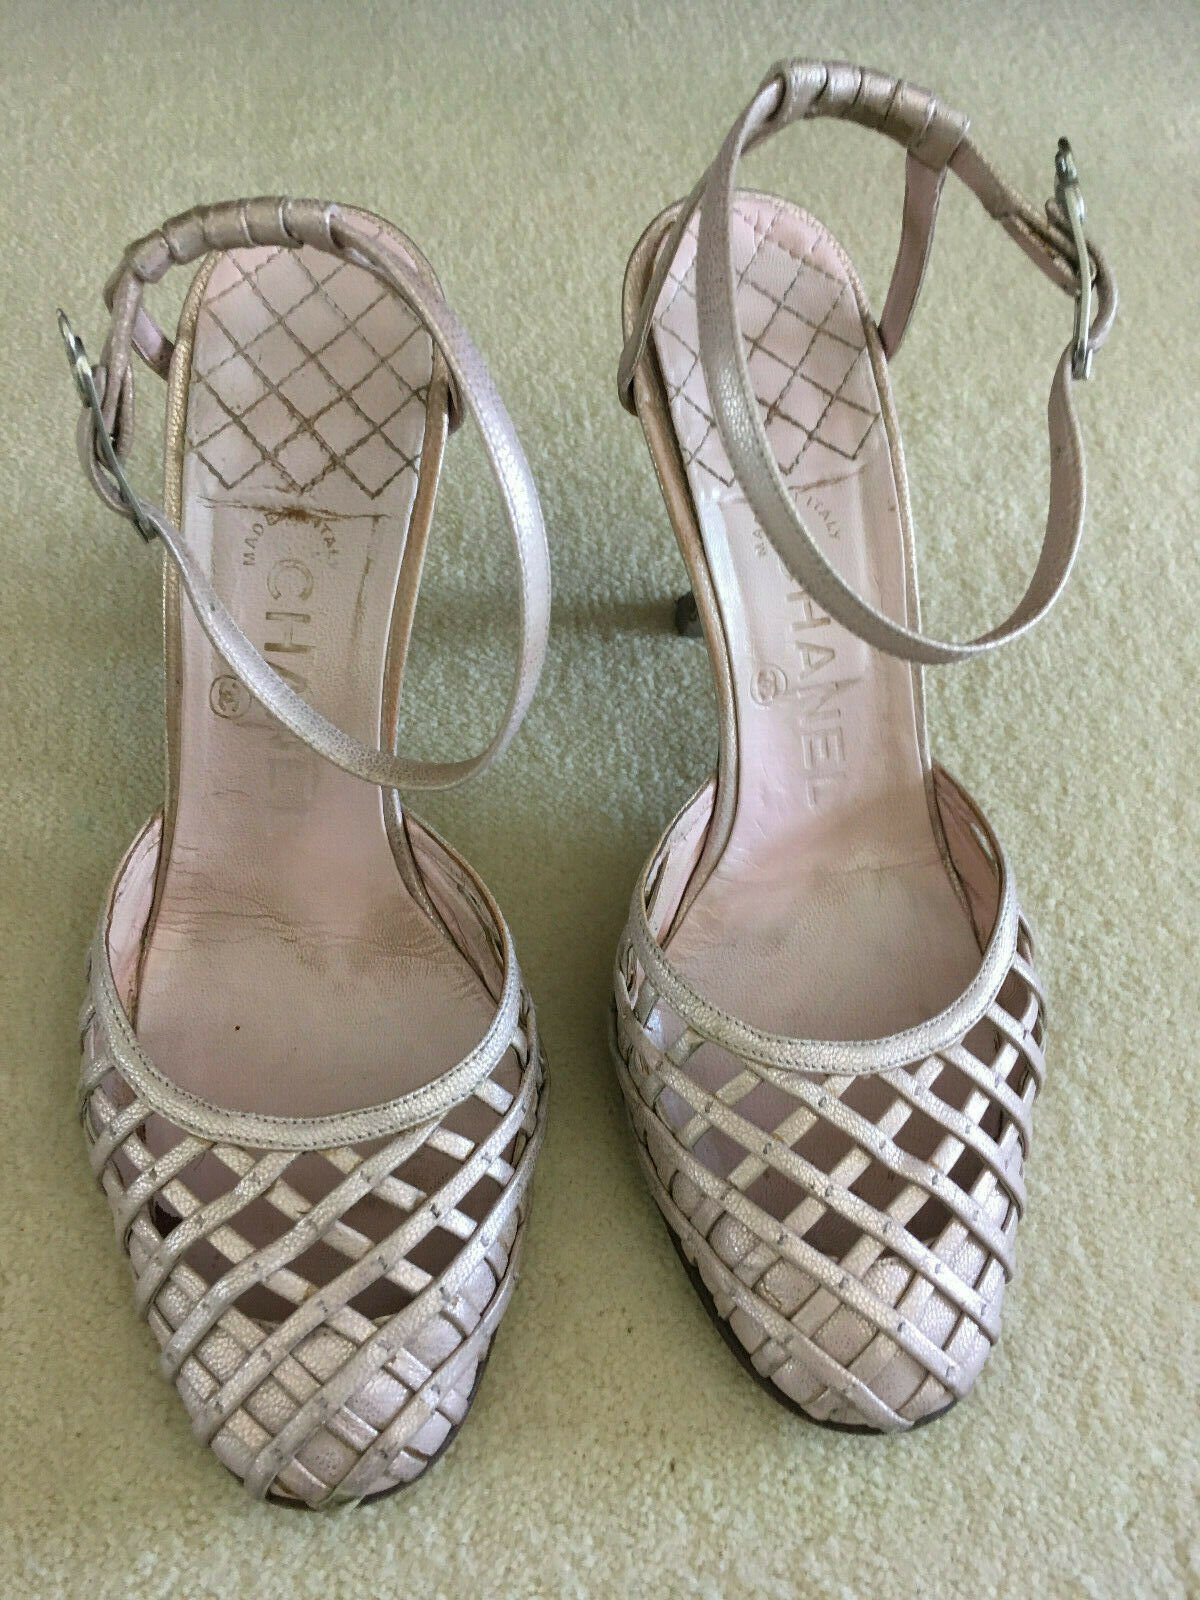 Chanel Fishnet Ankle-Strap Heels in White.jpg